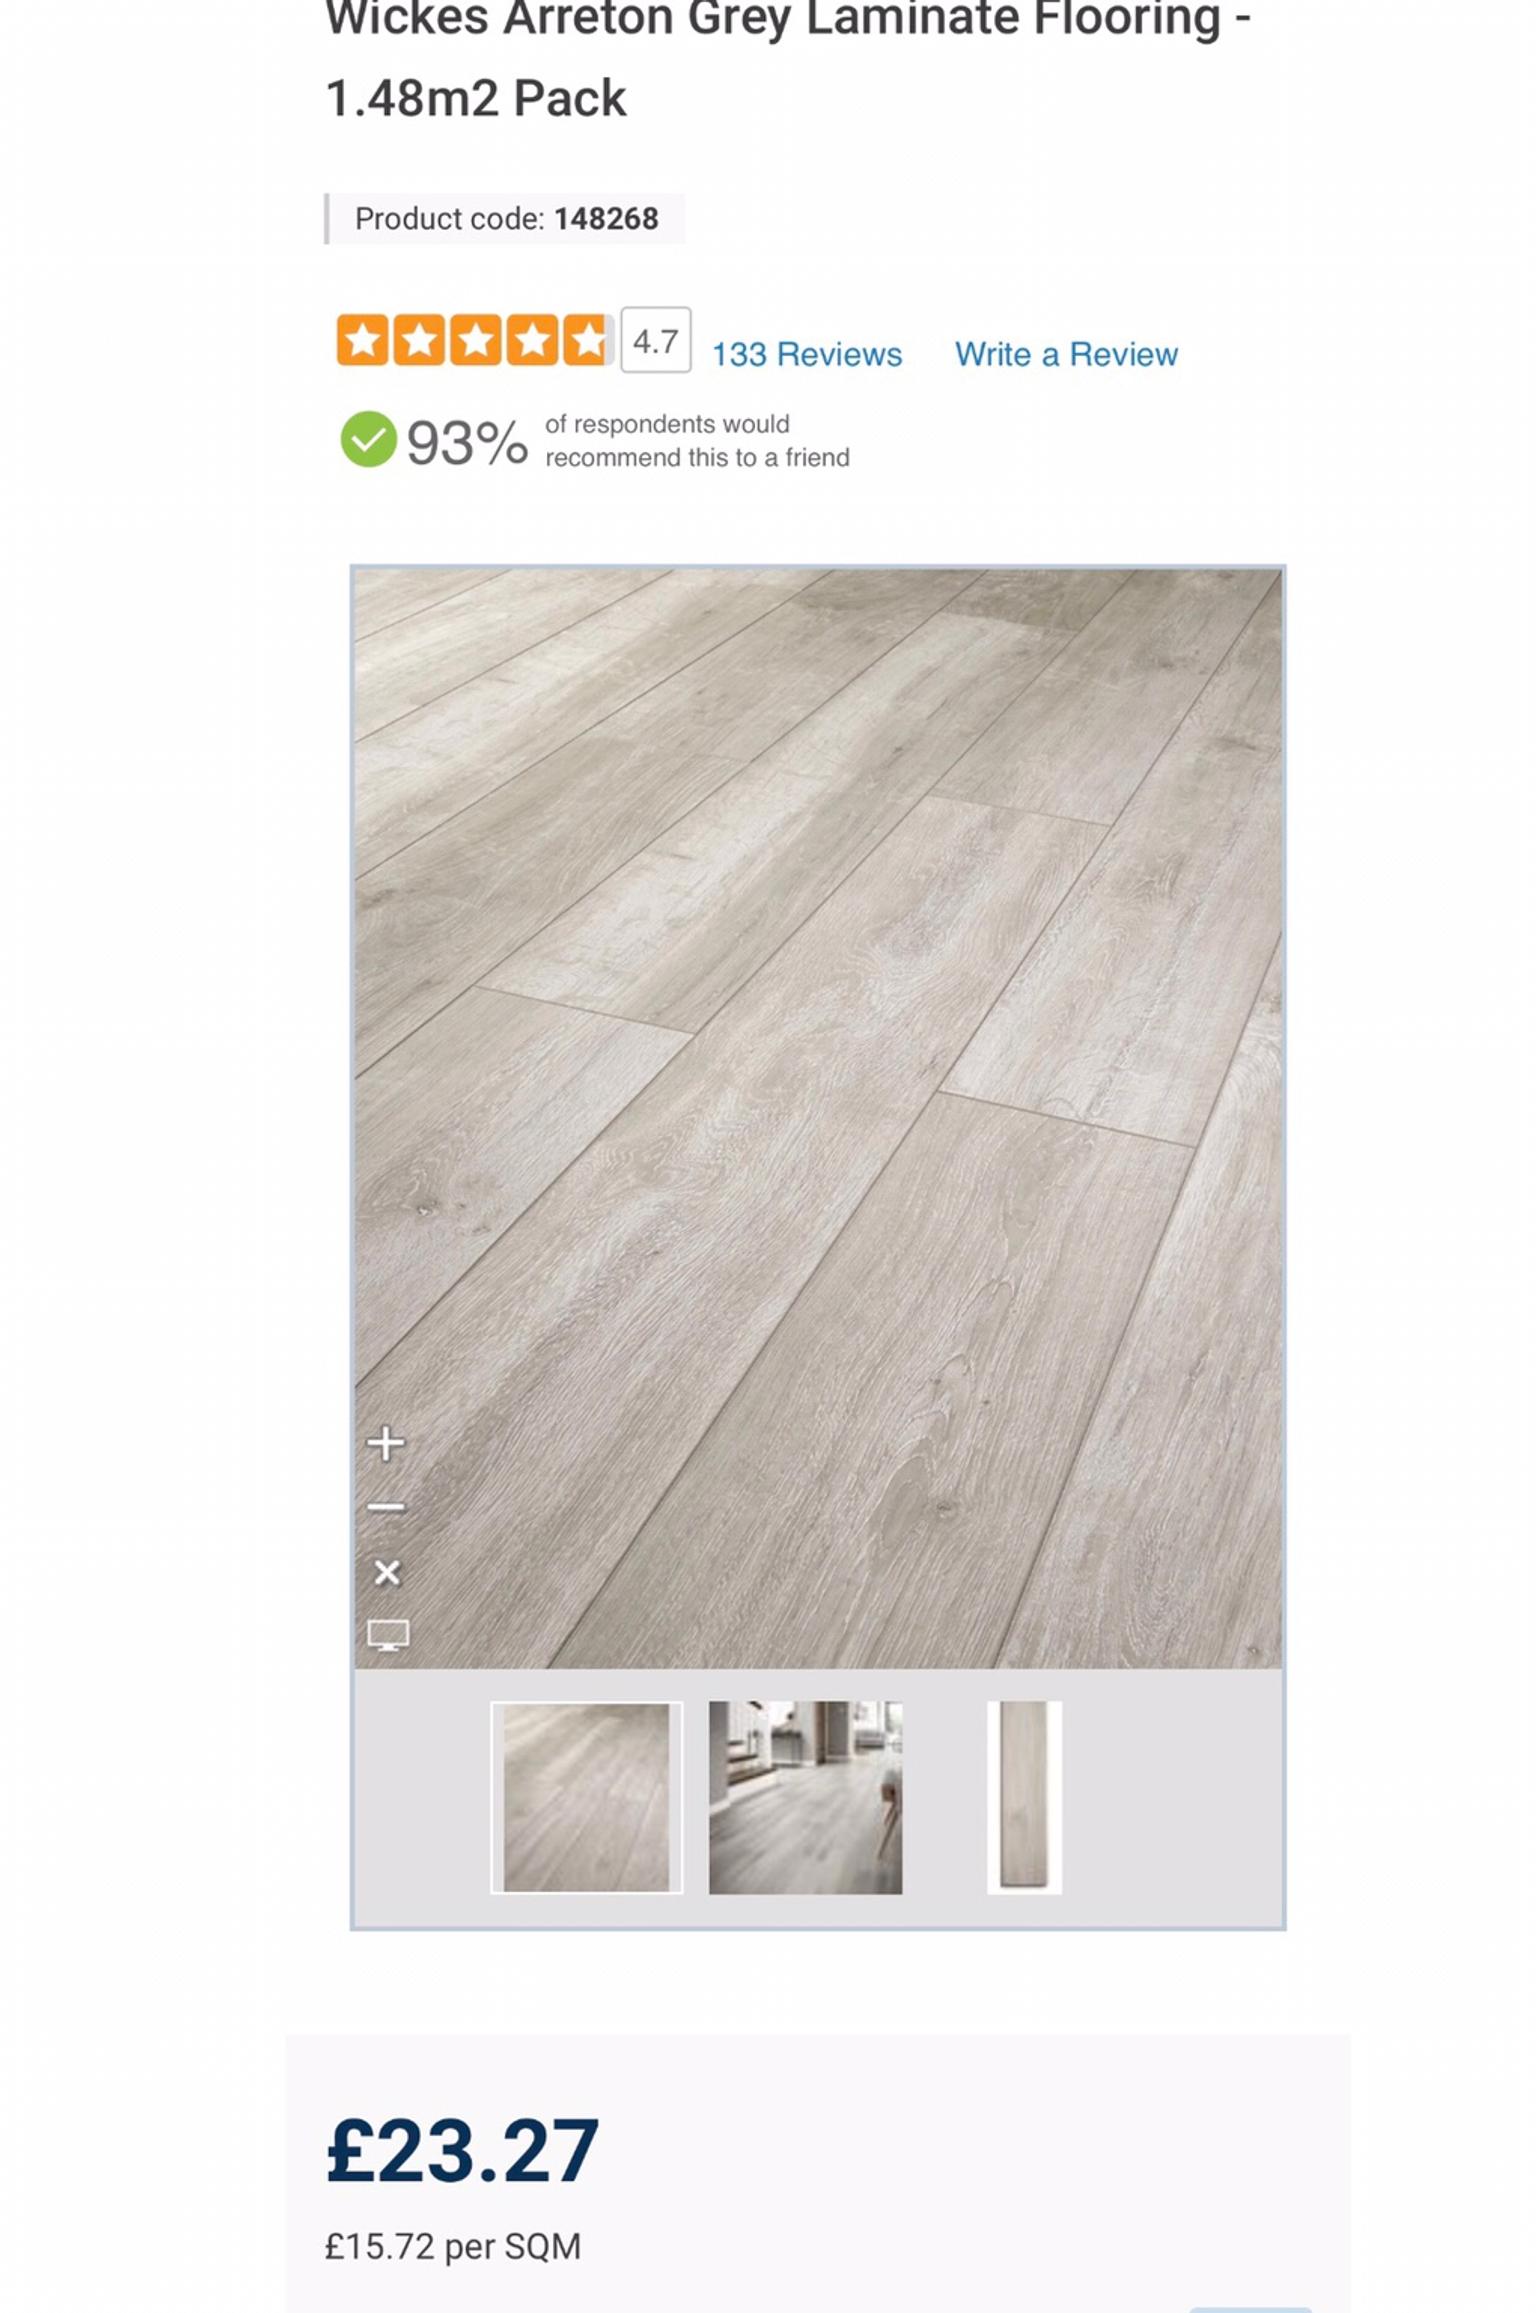 Wickes Arreton Grey Laminate Flooring 12mm In Bd7 Bradford For 2 200 00 For Sale Shpock